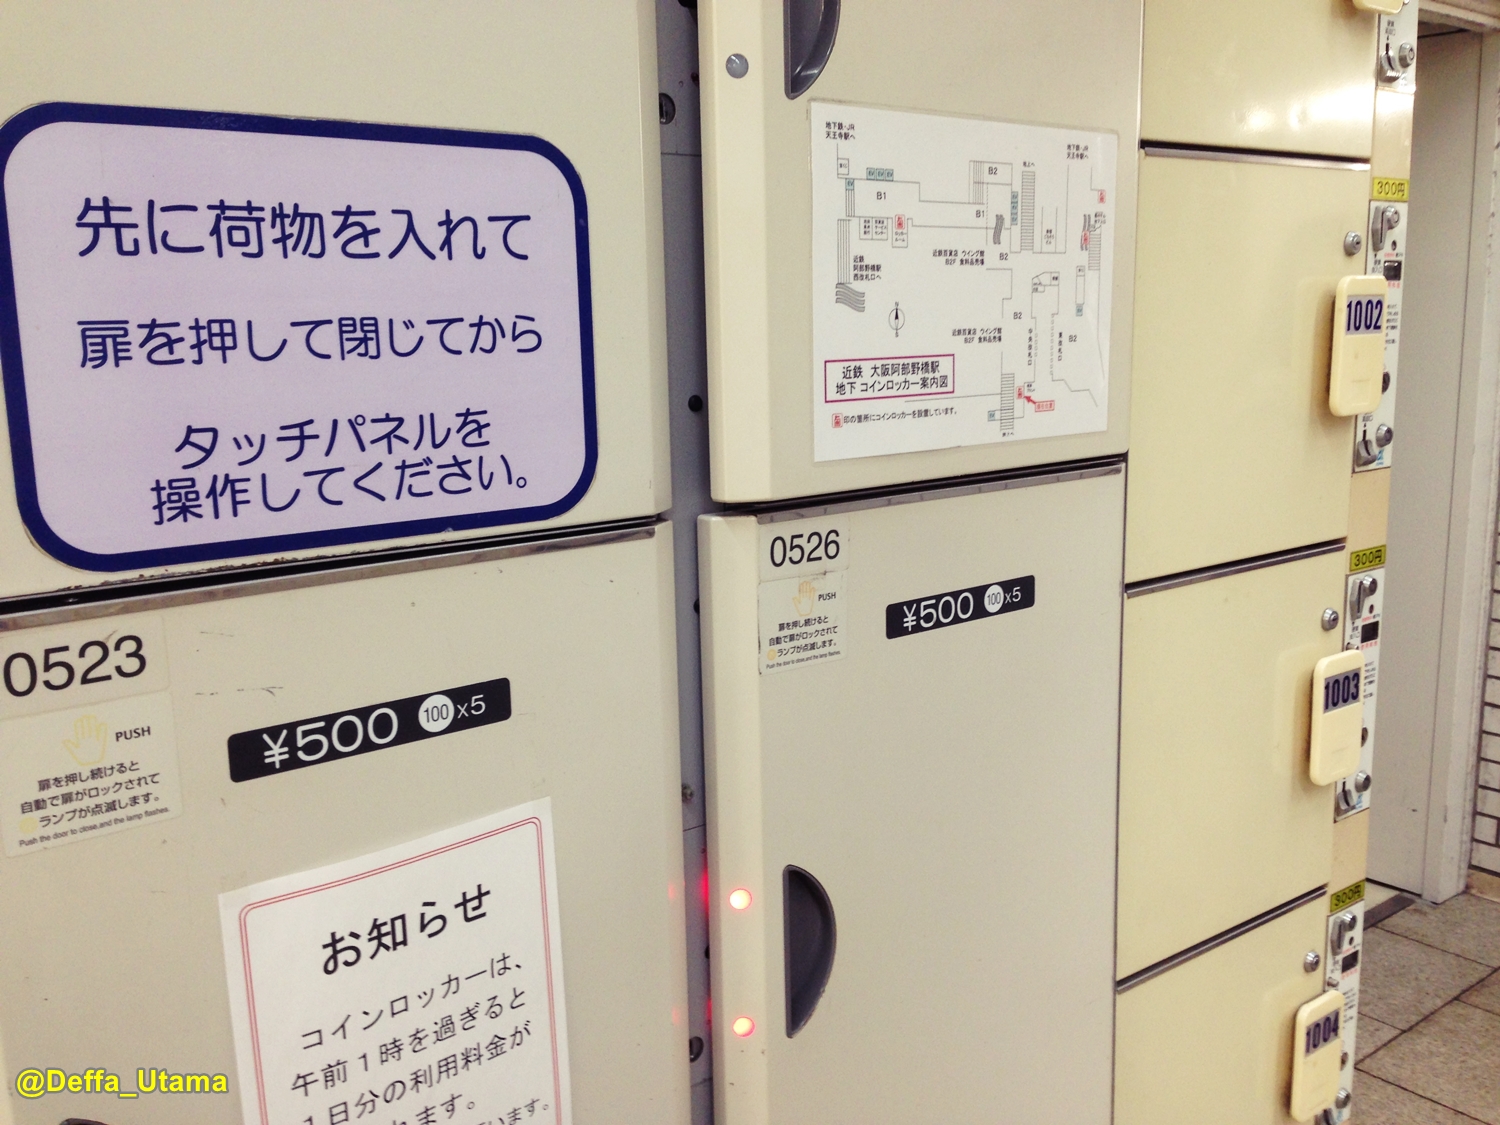 Cara Menggunakan Coin Locker di Jepang